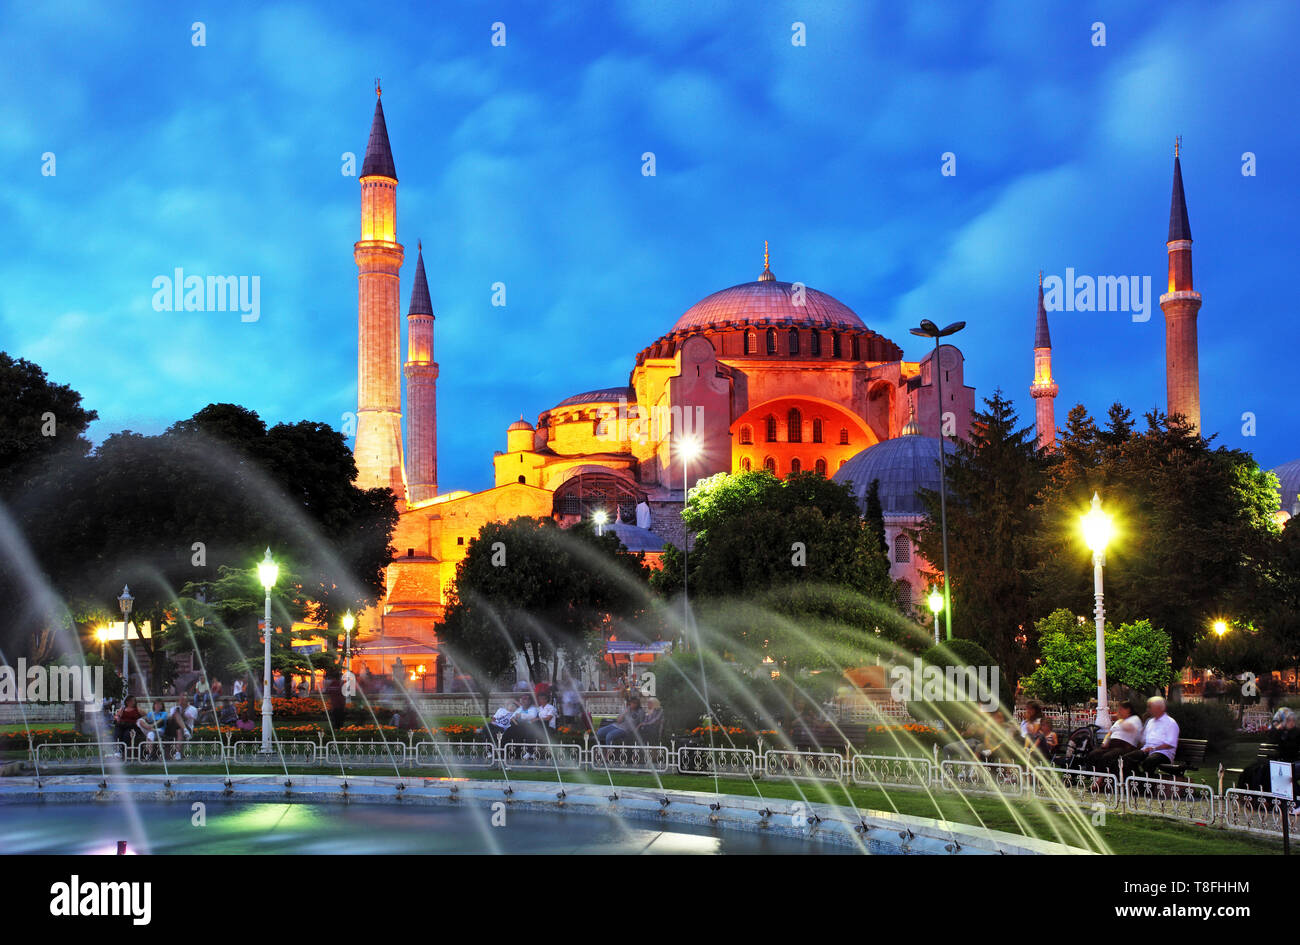 Istanbul mosque - Hagia Sophia at night Stock Photo